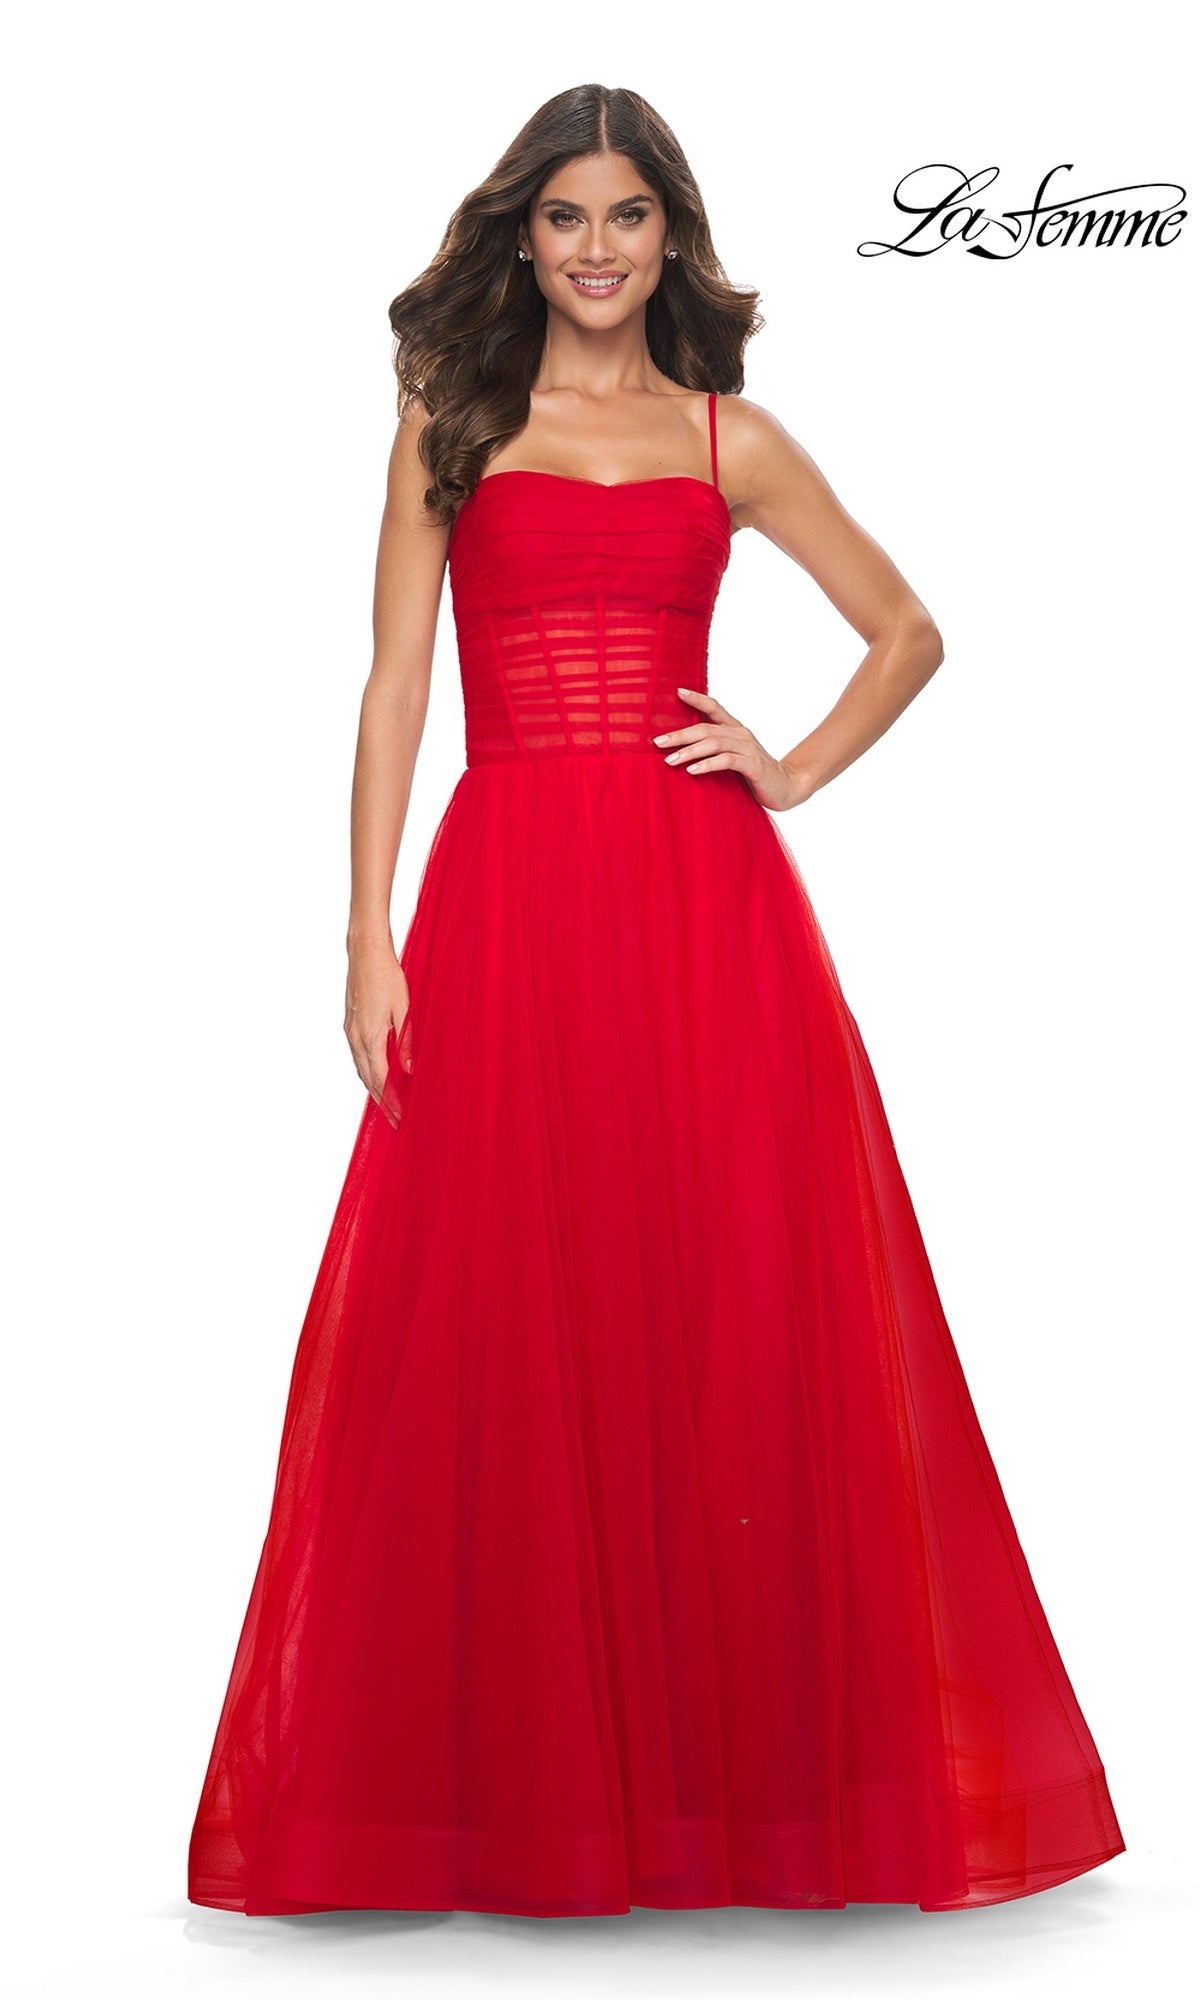  La Femme 32017 Formal Prom Dress